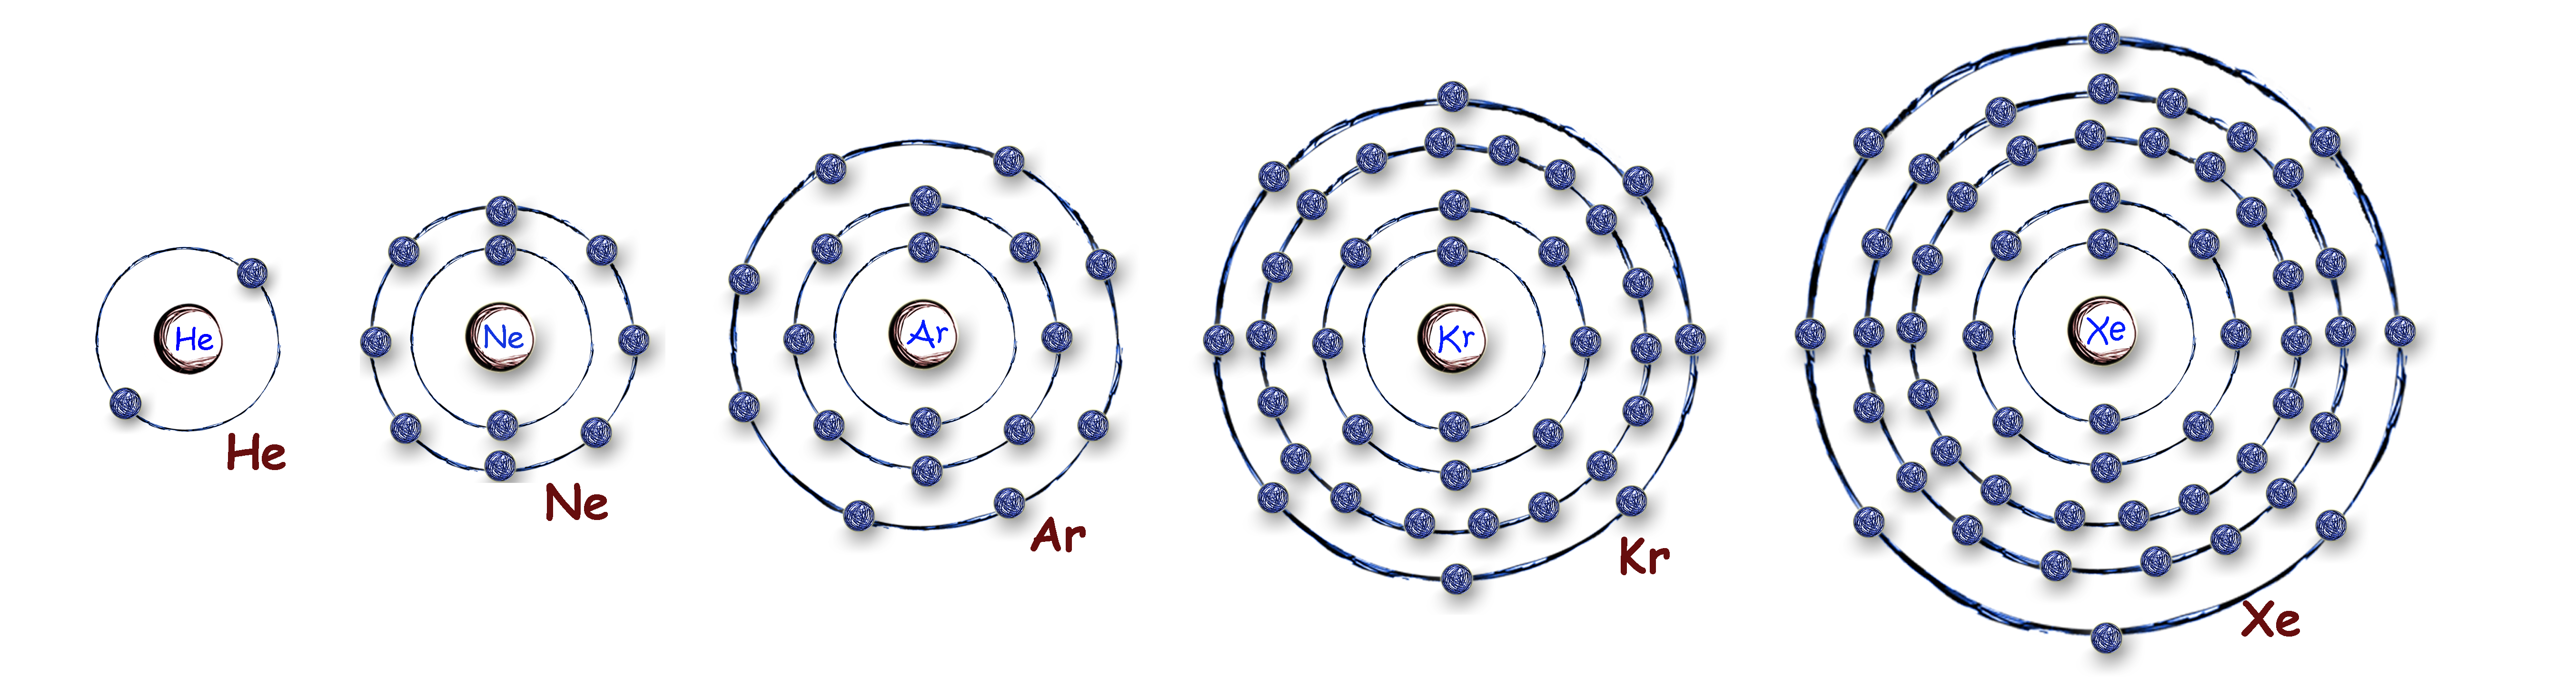 Модель ядра гелия. Планетарная модель атома гелия. Атомная модель гелия. Модель строения атома гелия. Атом гелия строение атома.